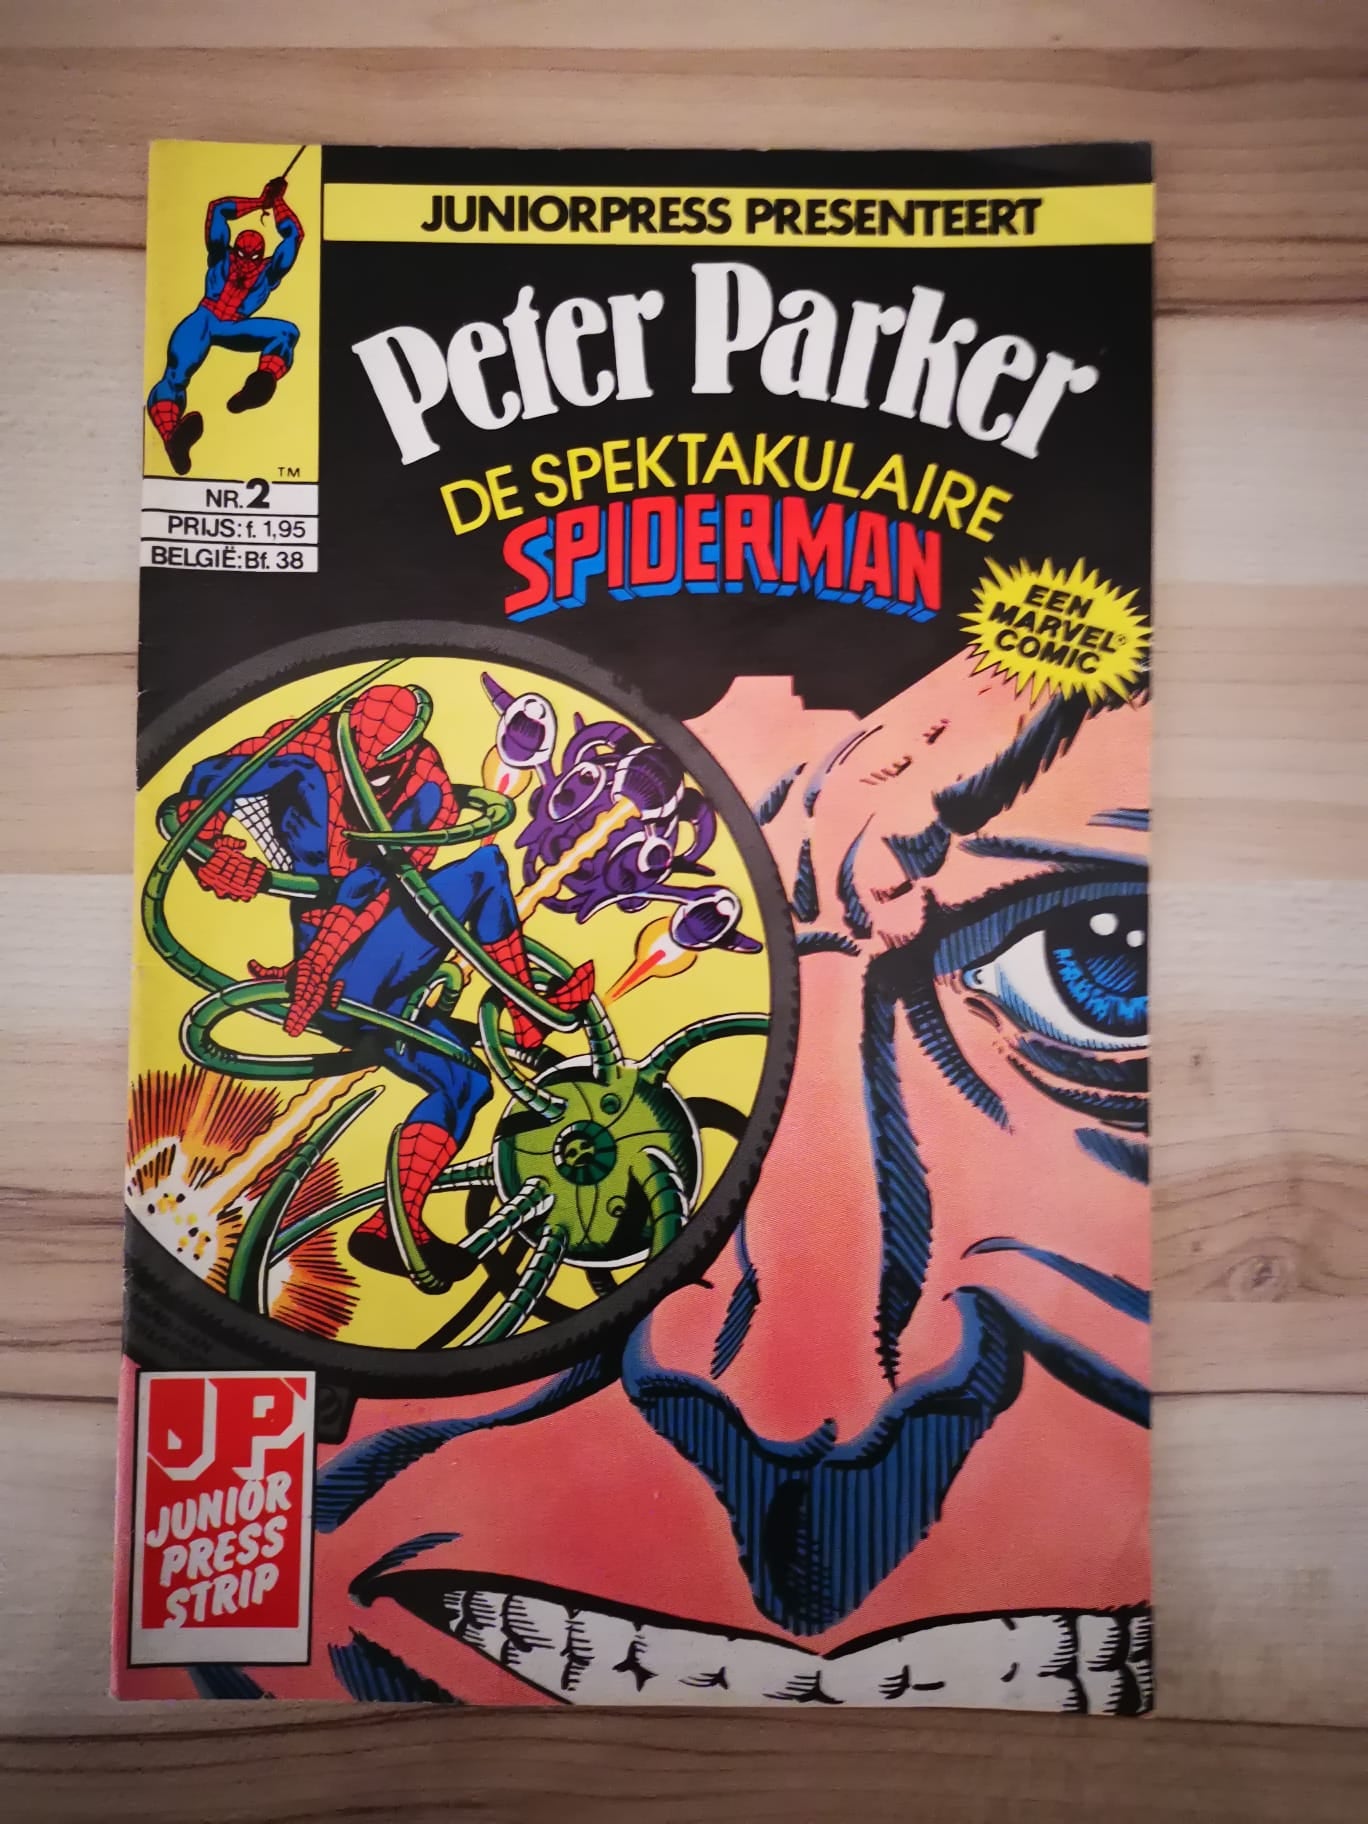 Peter Parker De spektakulaire spiderman #2